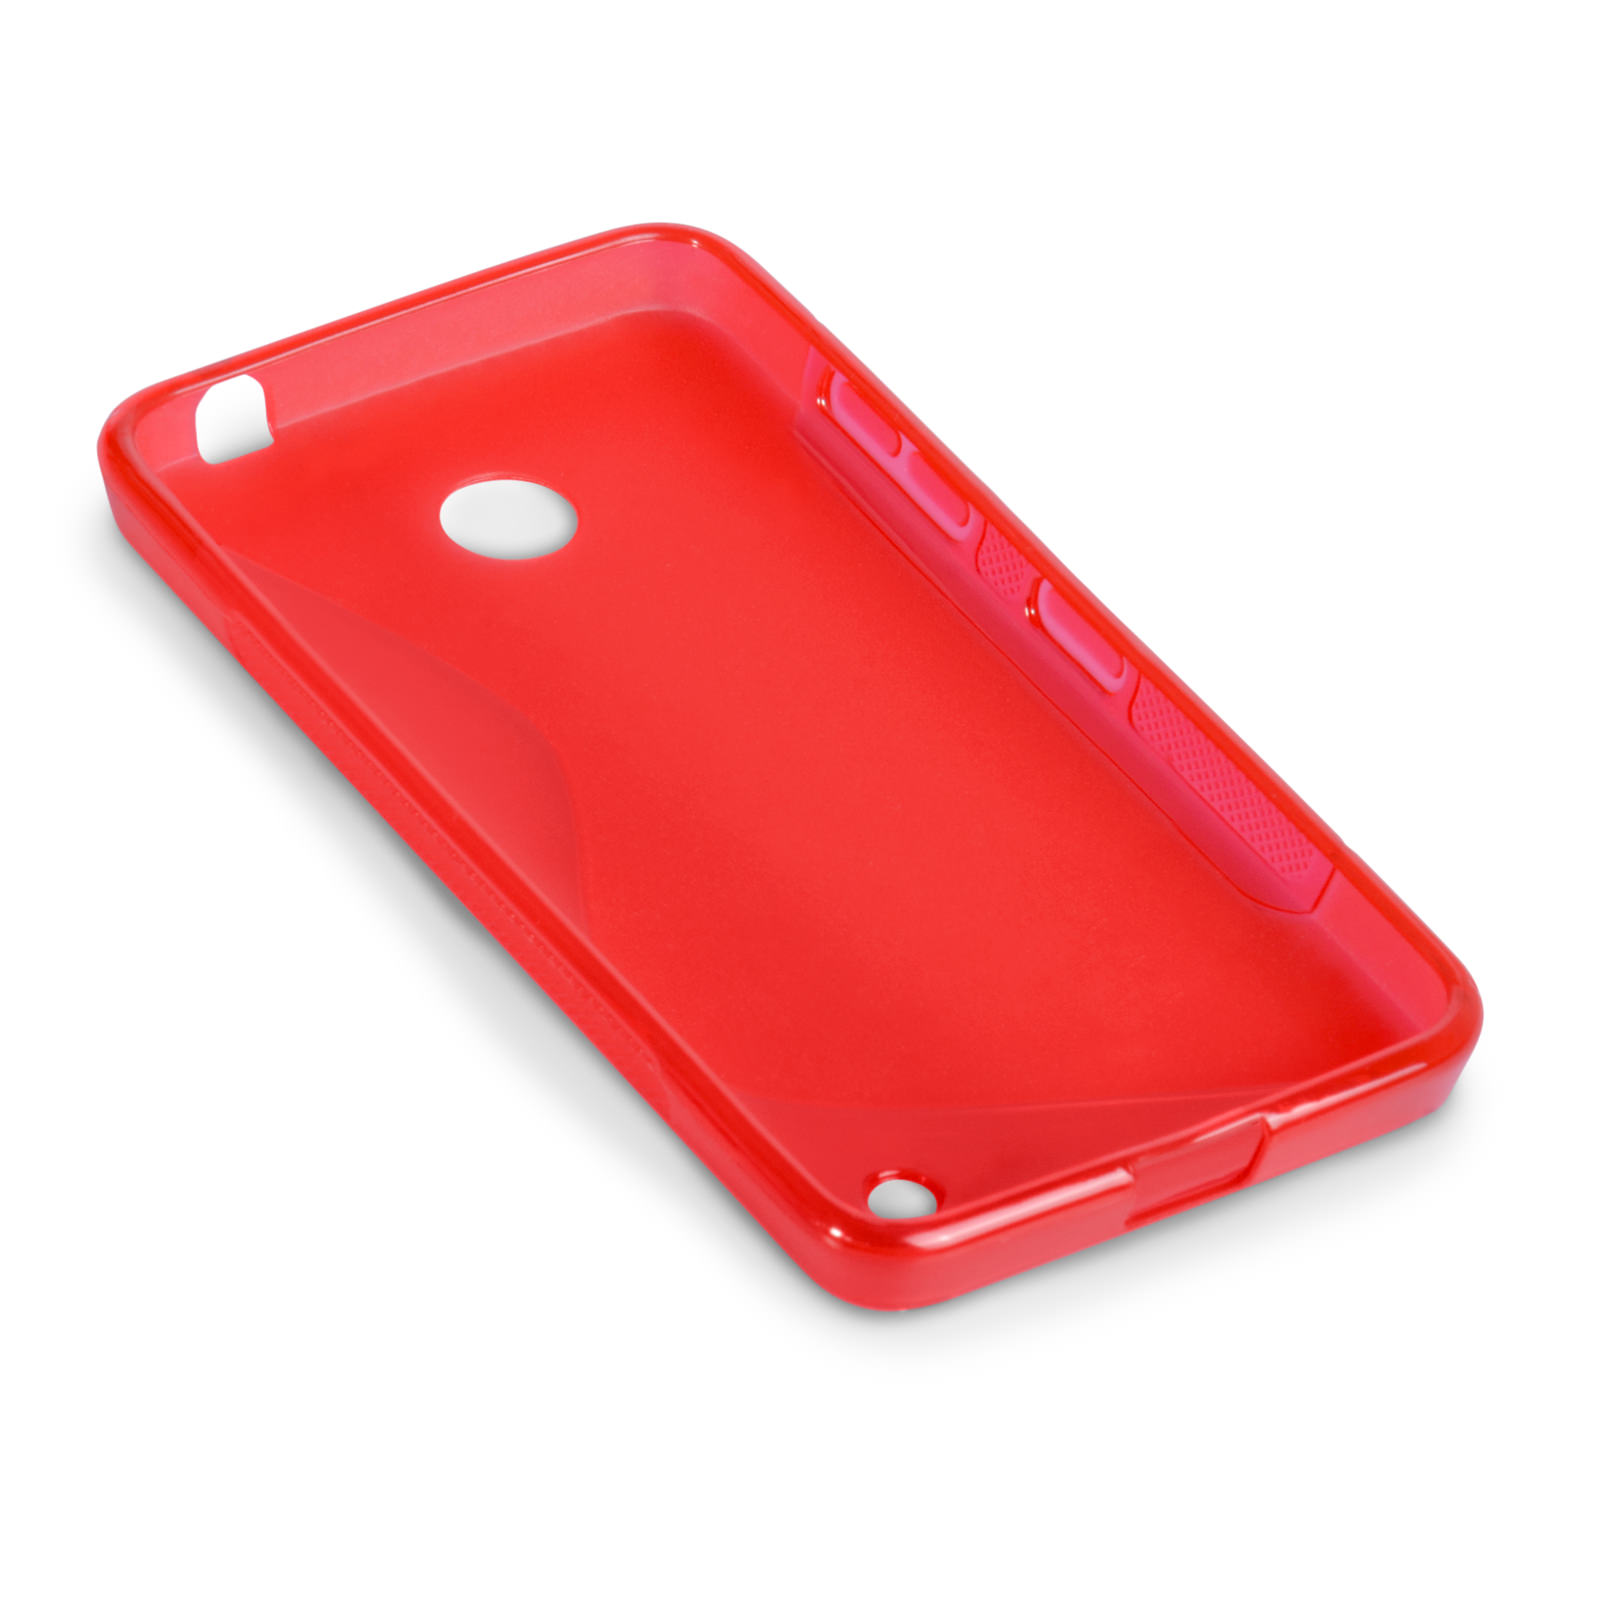 Caseflex Nokia Lumia 630 Silicone Gel S-Line Case - Red